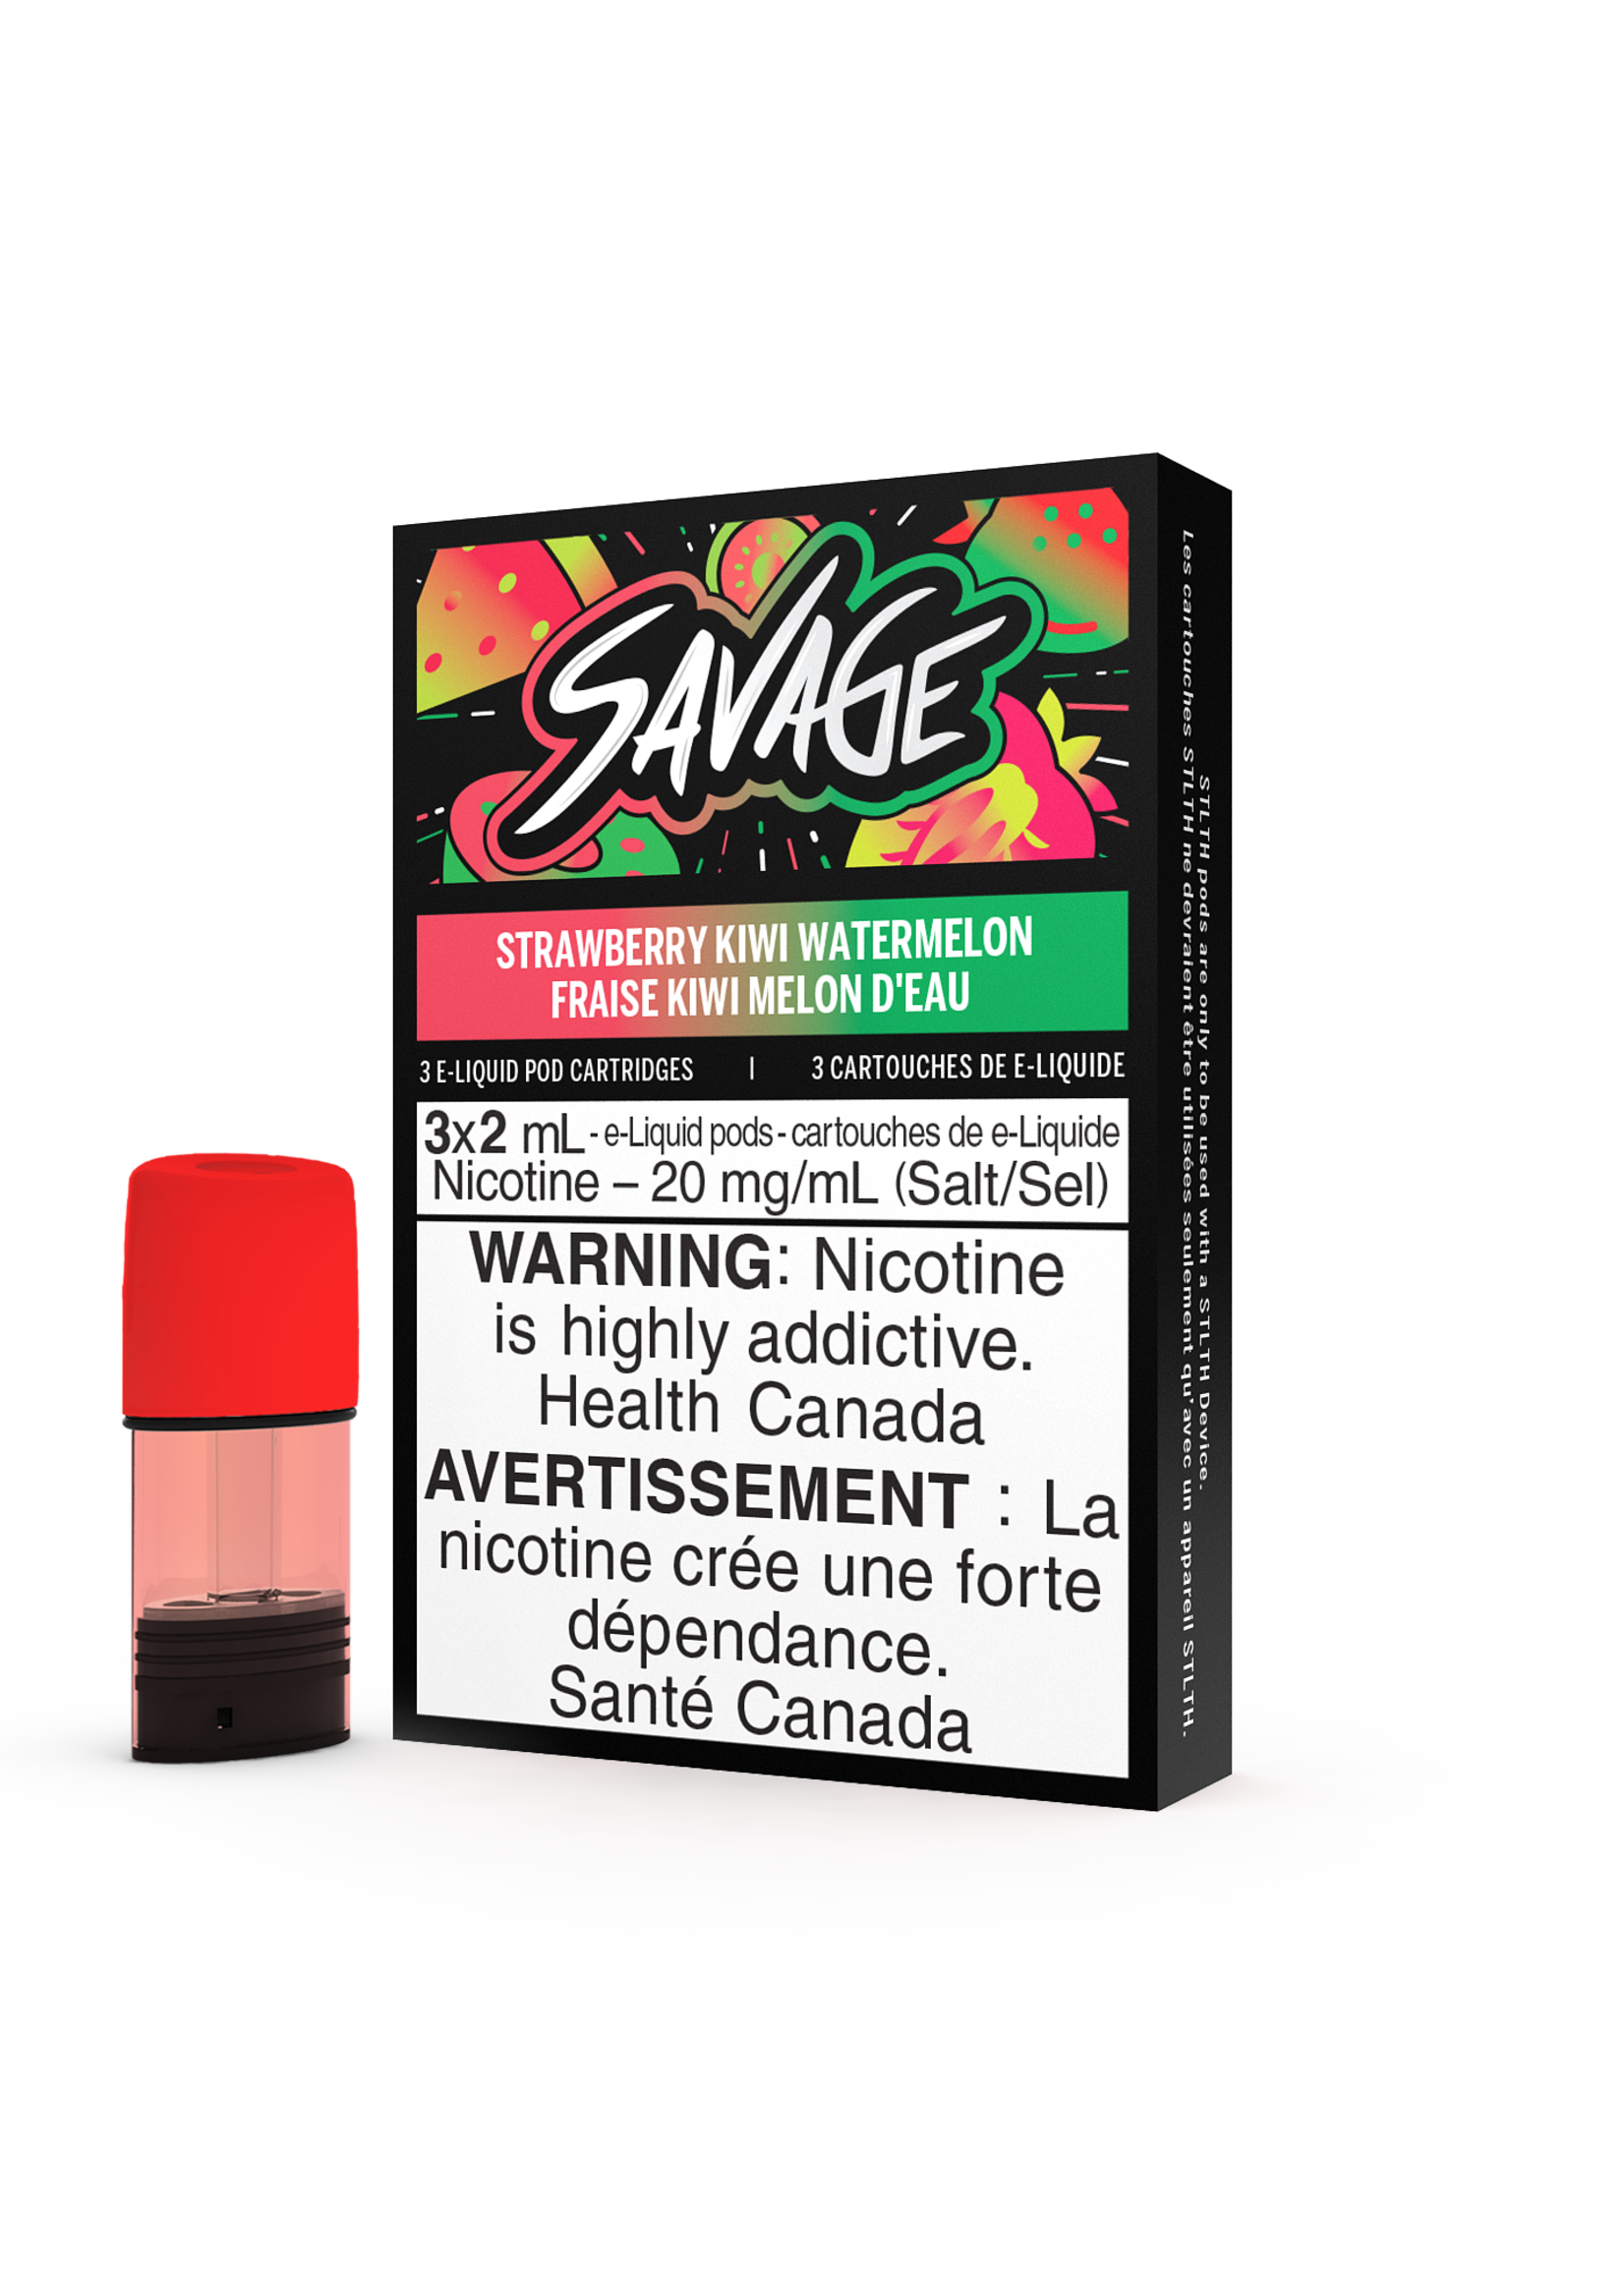 Savage Strawberry Kiwi Watermelon - Stlth x Savage